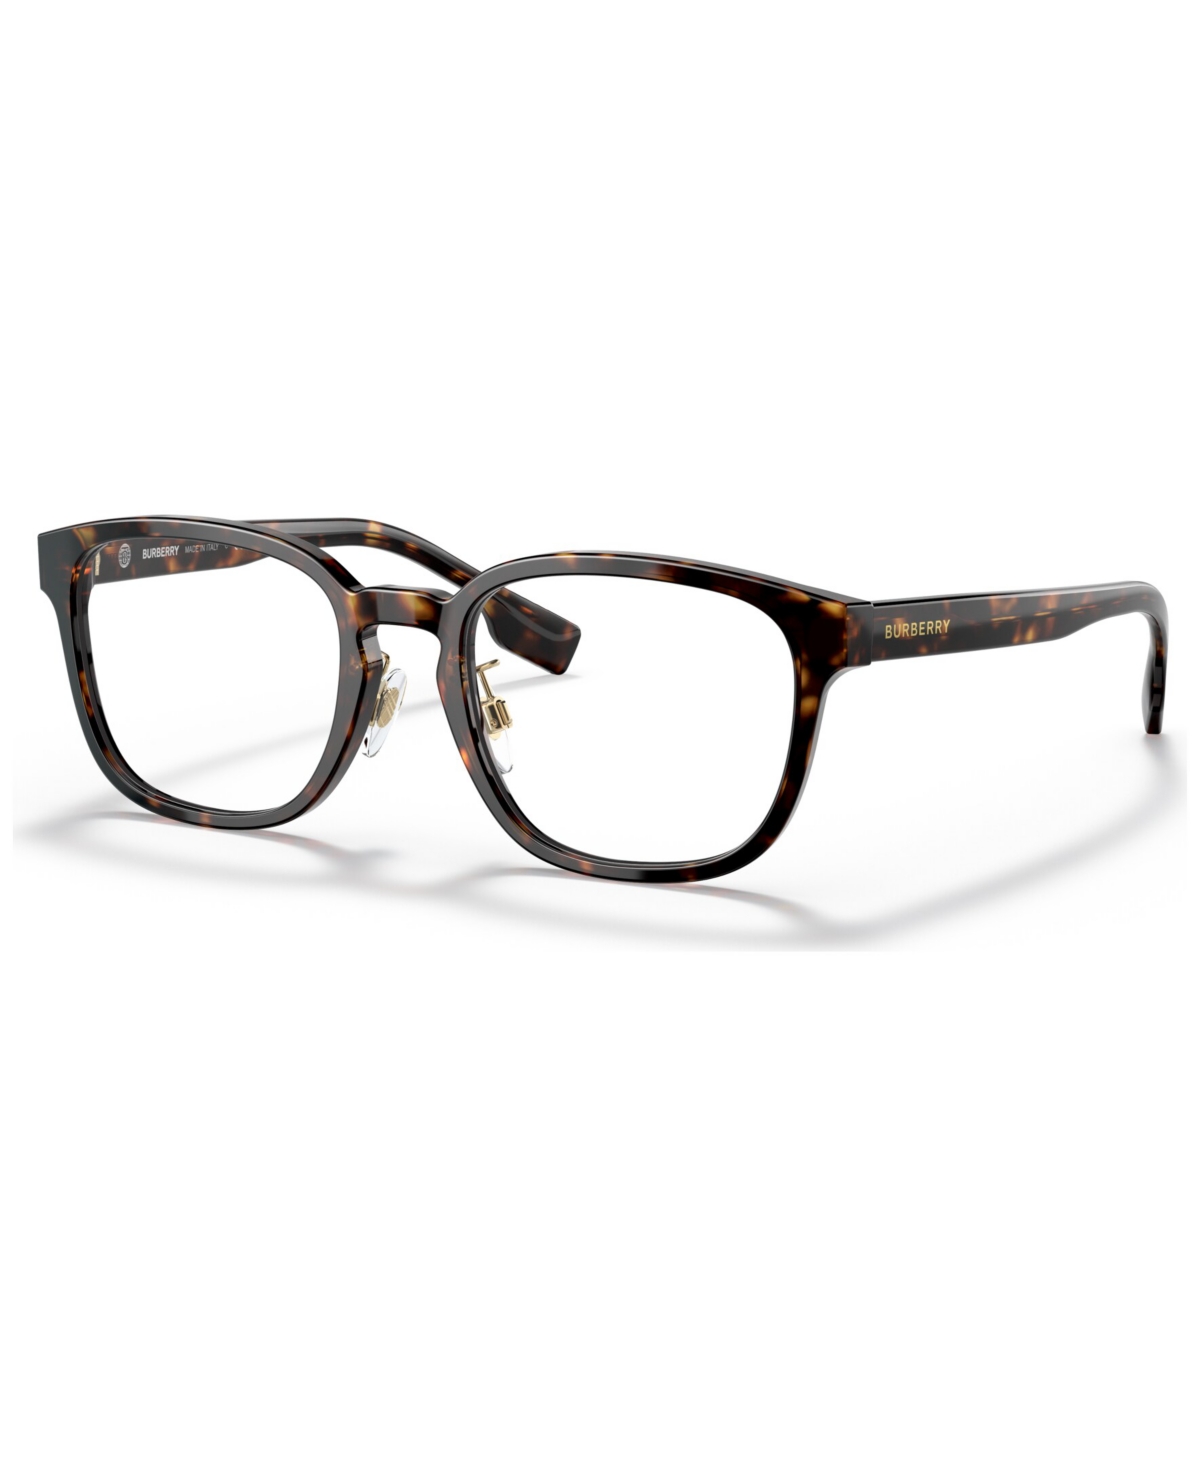 Men's Edison Eyeglasses, BE2344F 53 - Dark Havana